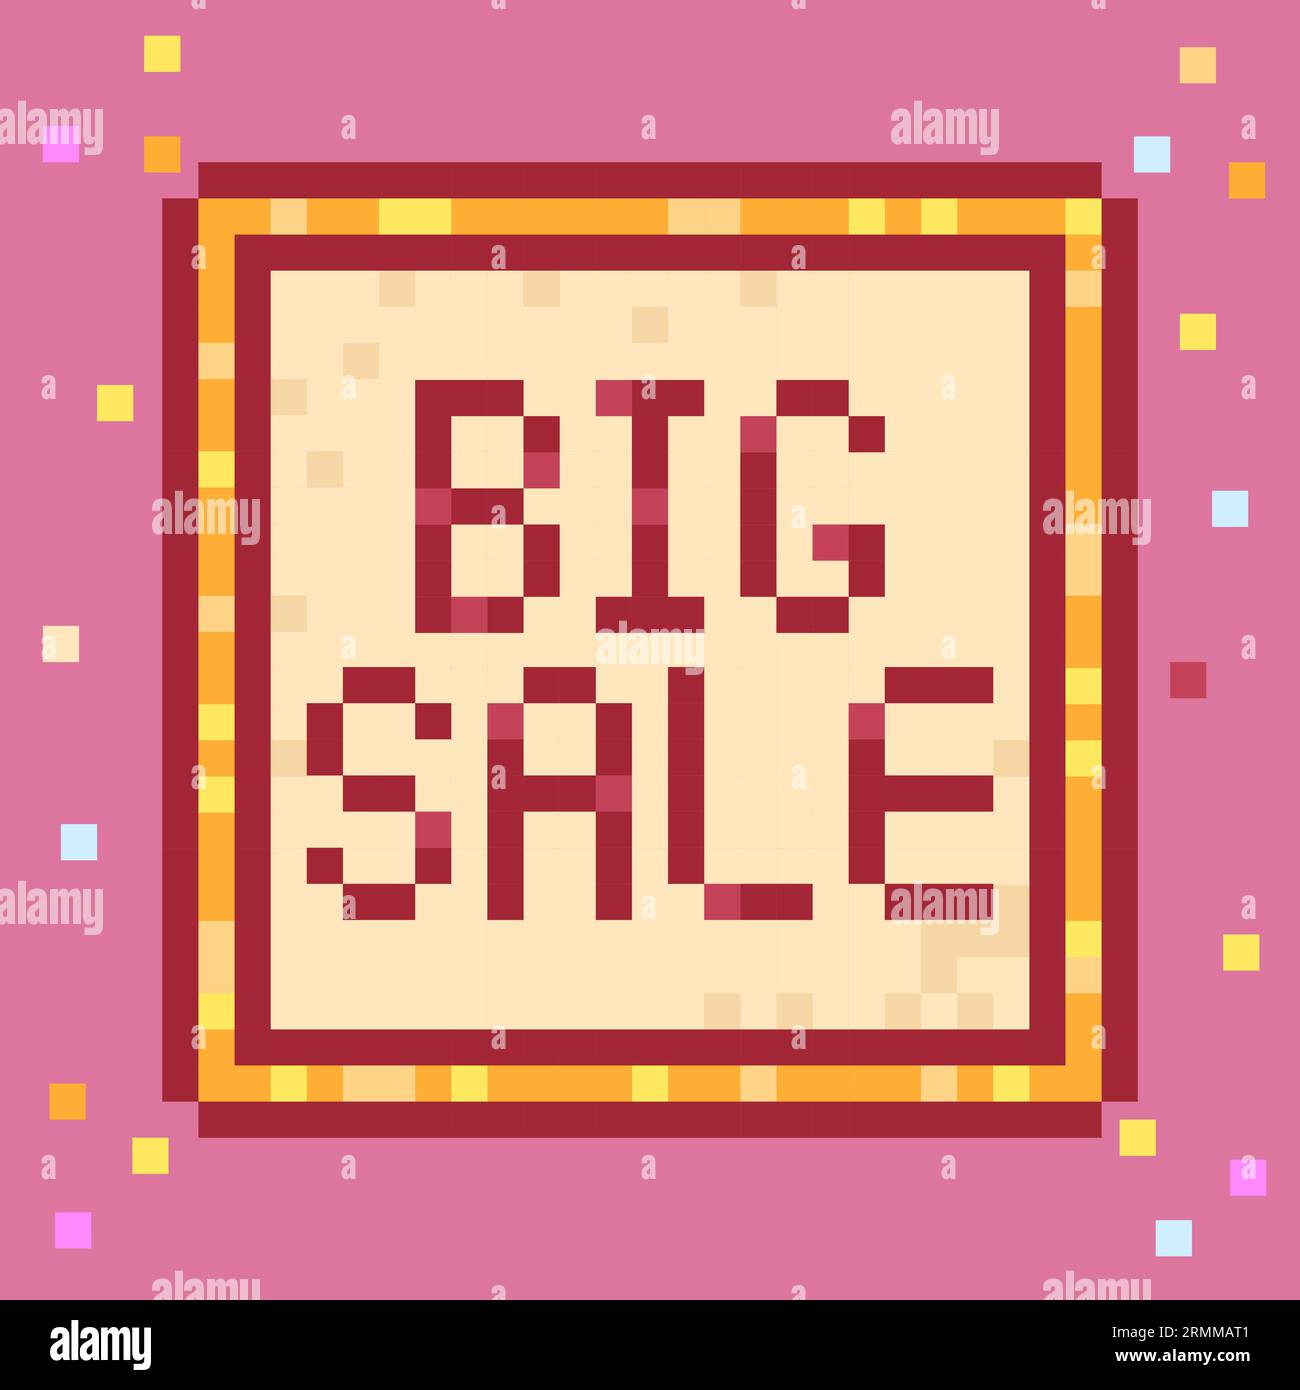 Big Sale sign. Pixel art style icon 8-bit Stock Vector